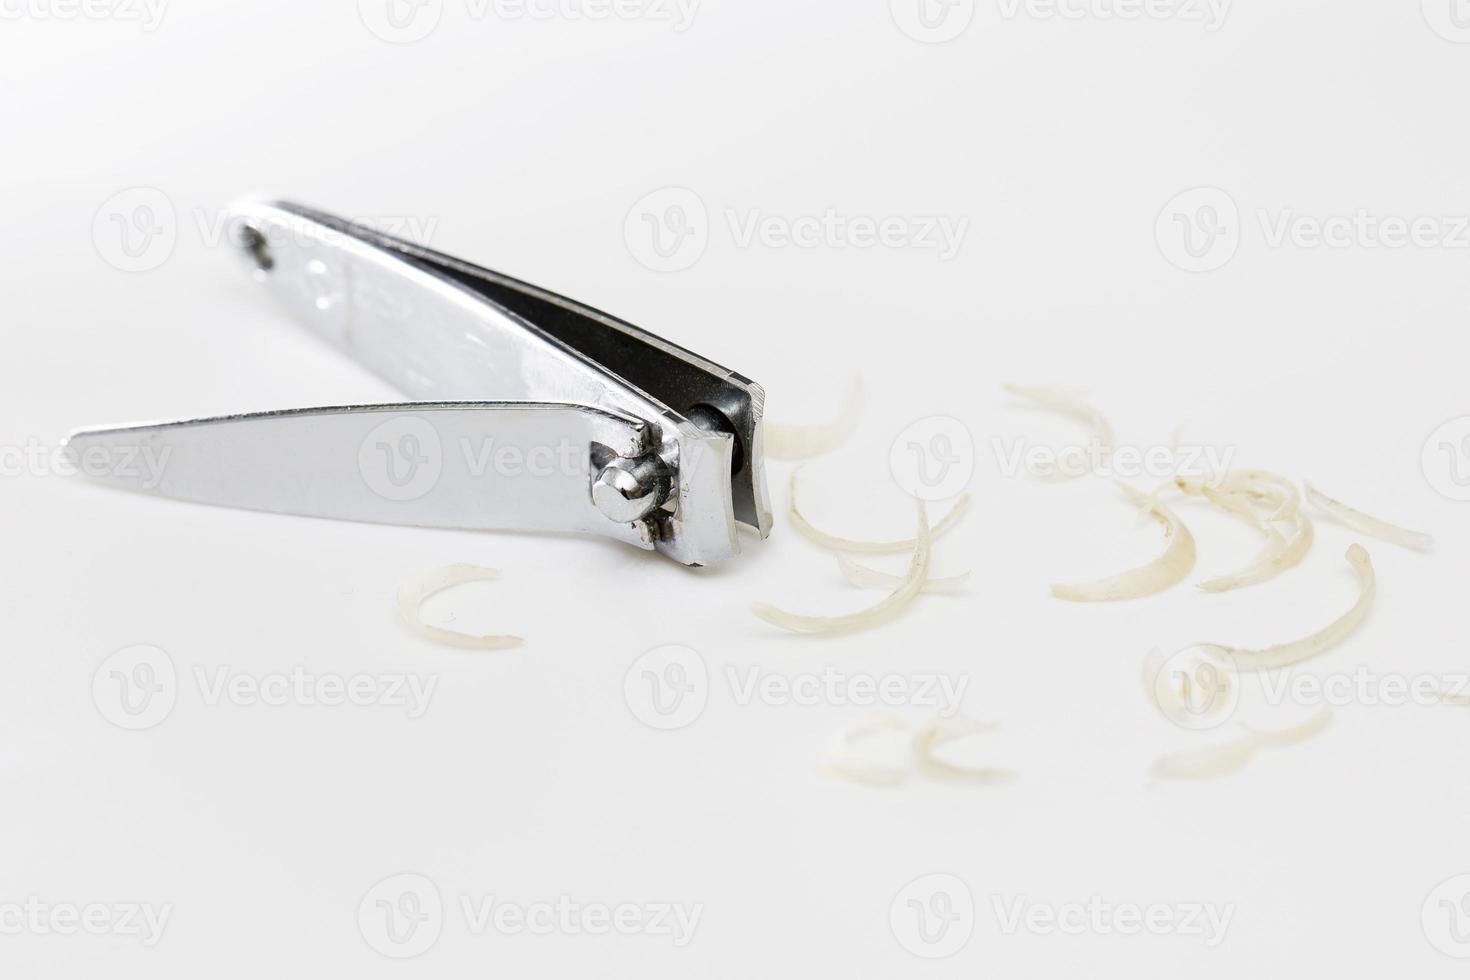 tosquiadeira e unhas sujas no fundo branco foto